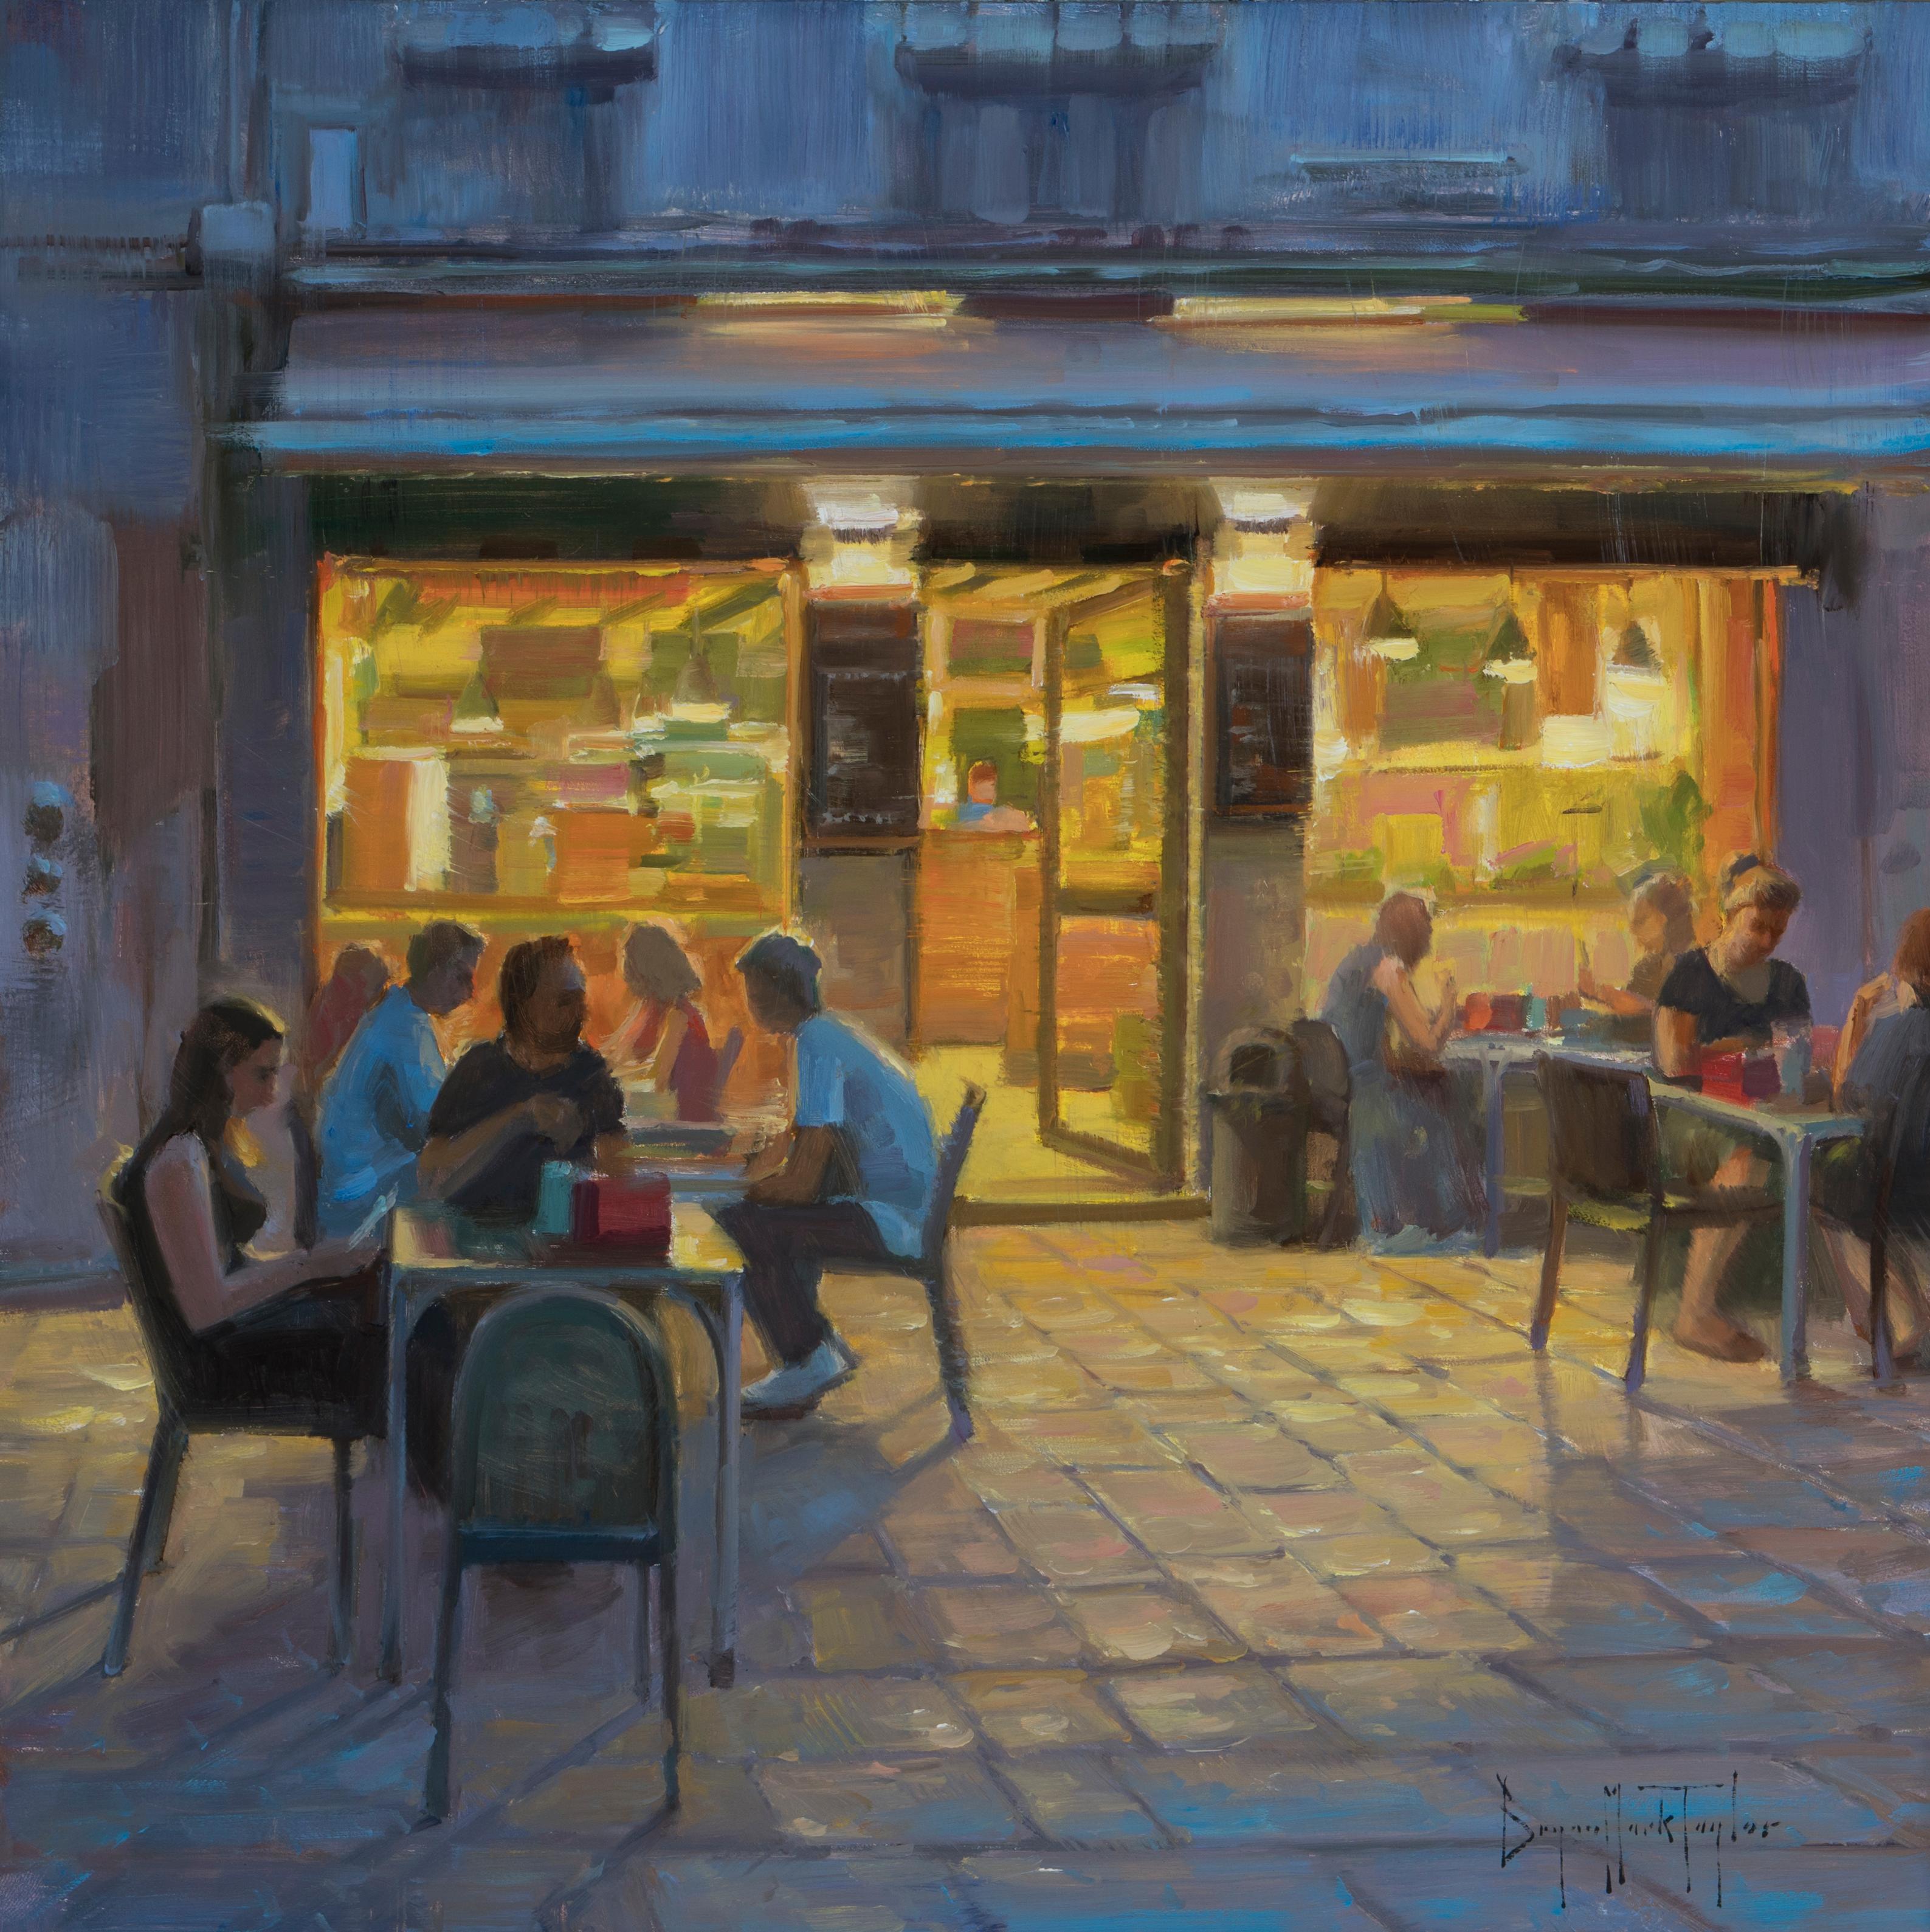 Bryan Mark Taylor Landscape Painting - "Night Café" Oil Painting